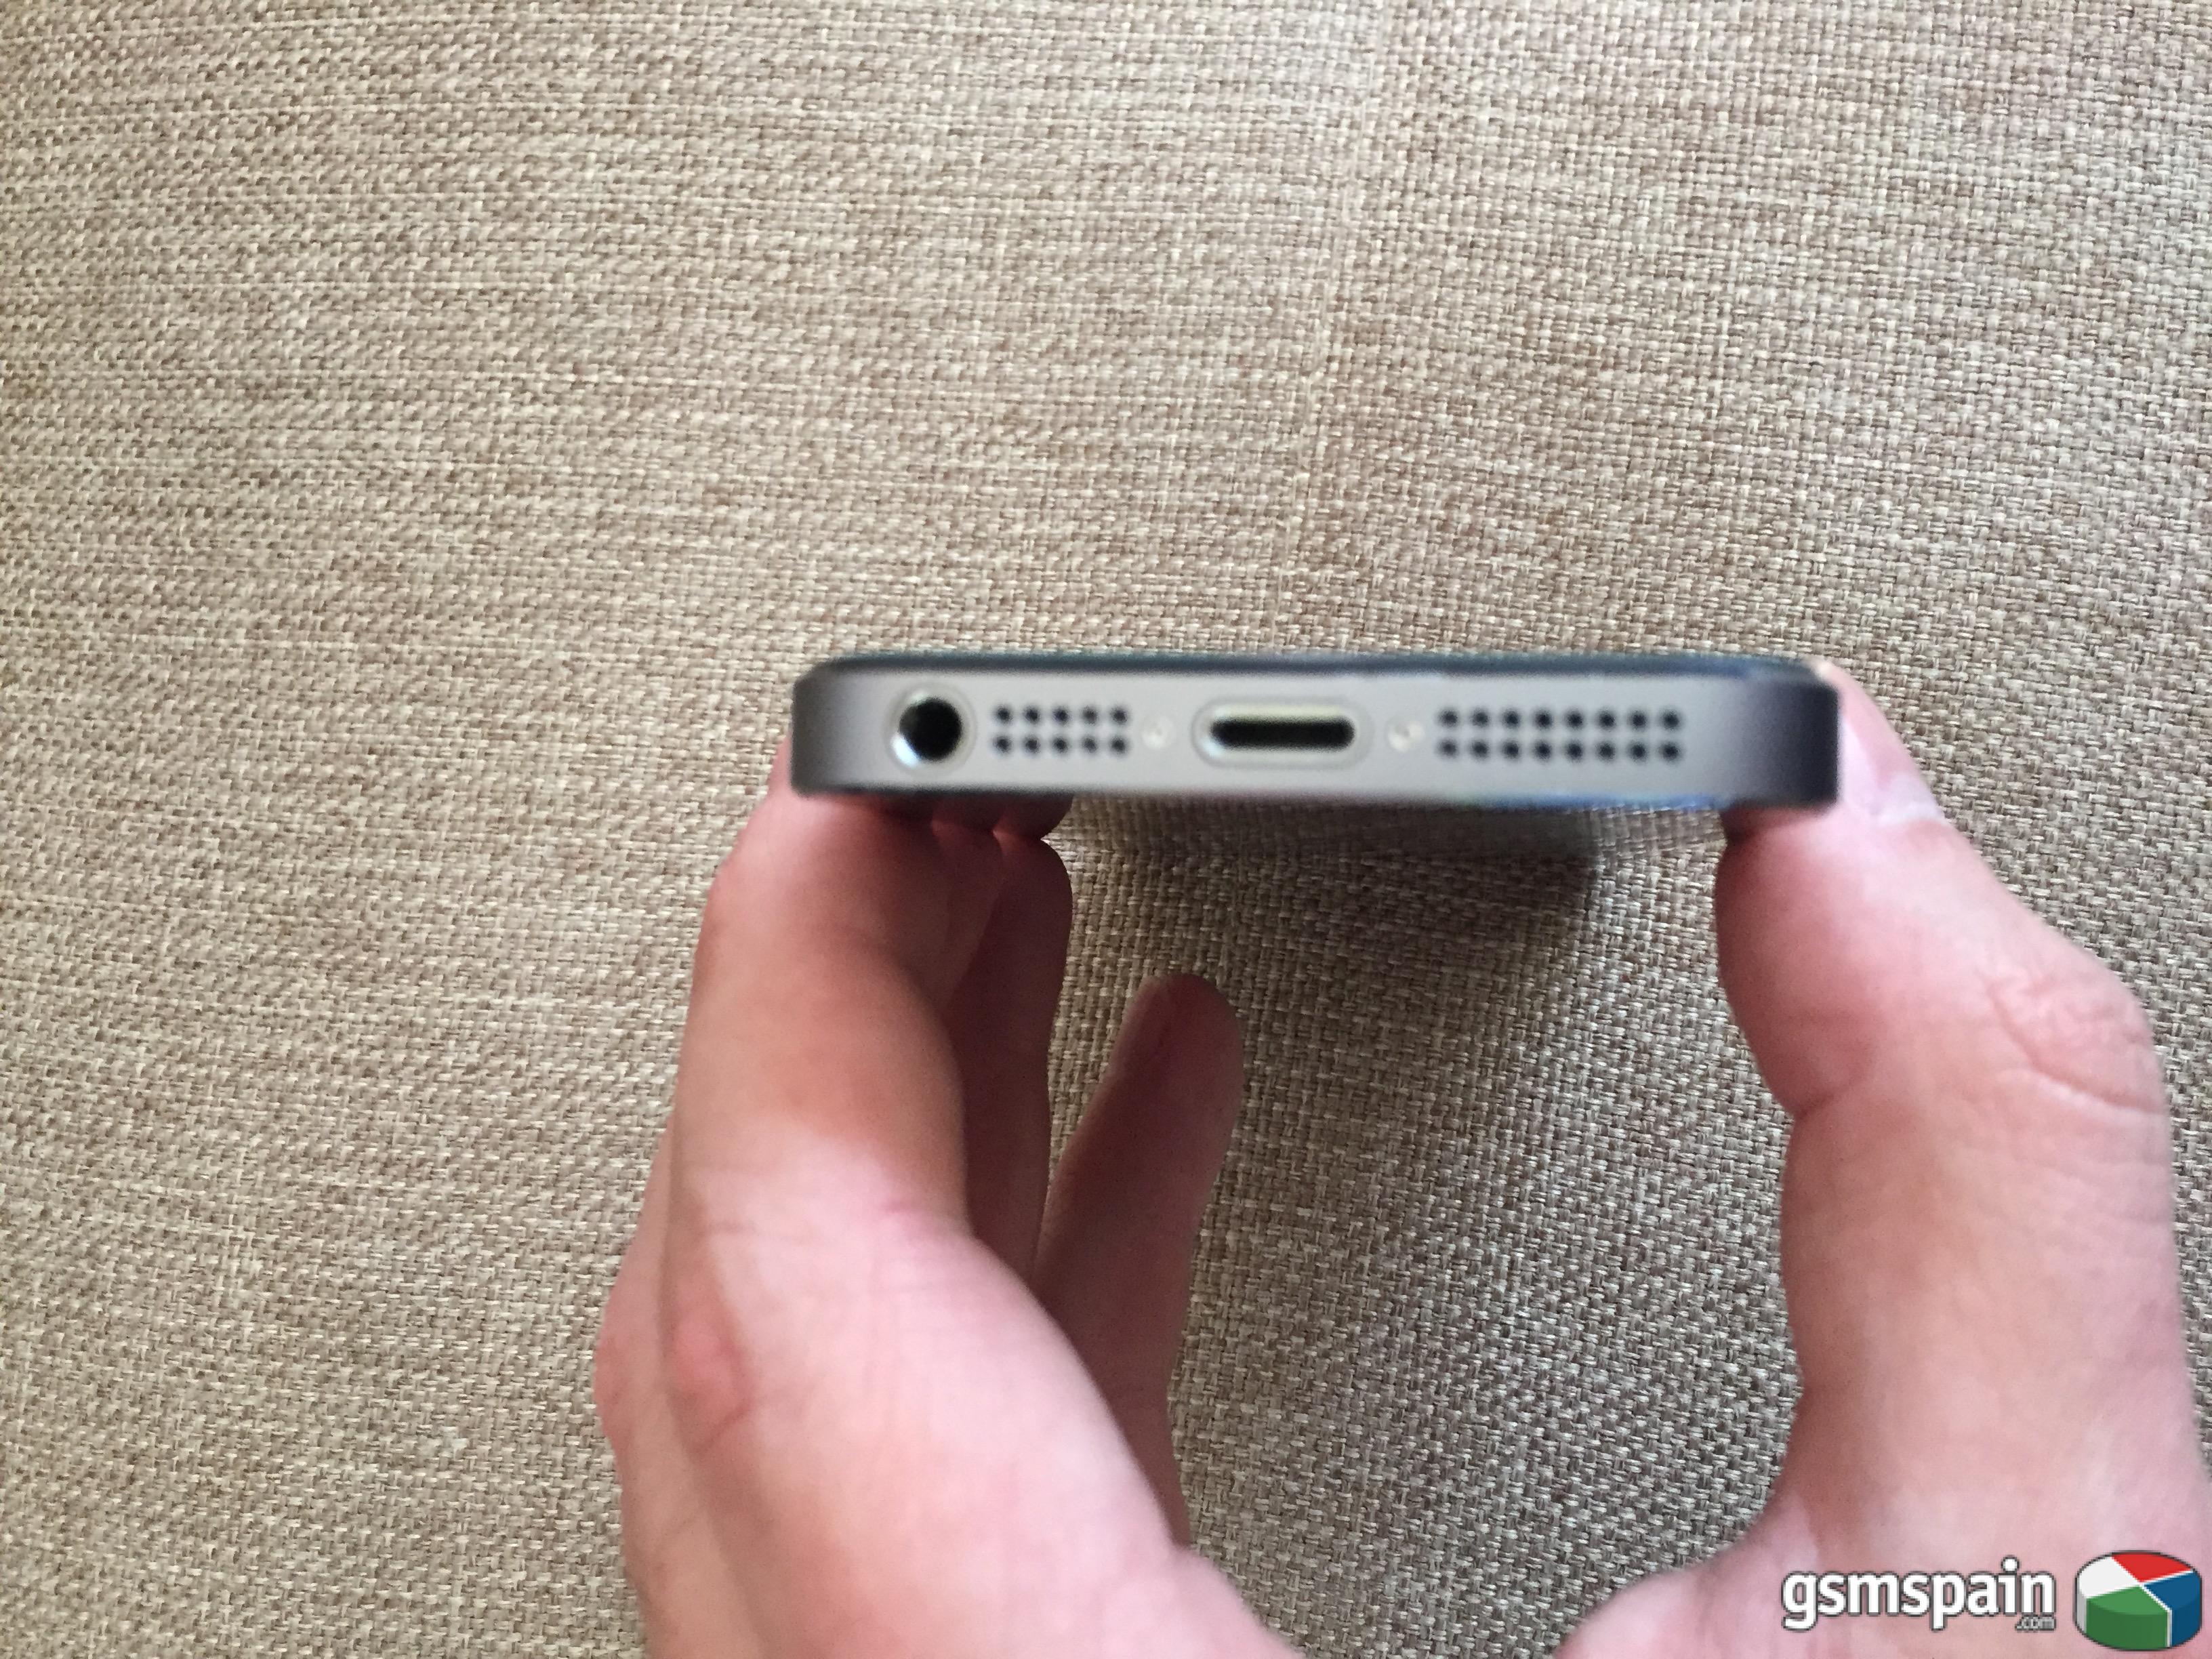 [VENDO] iPhone 5s 16gb gris espacial con accesorios